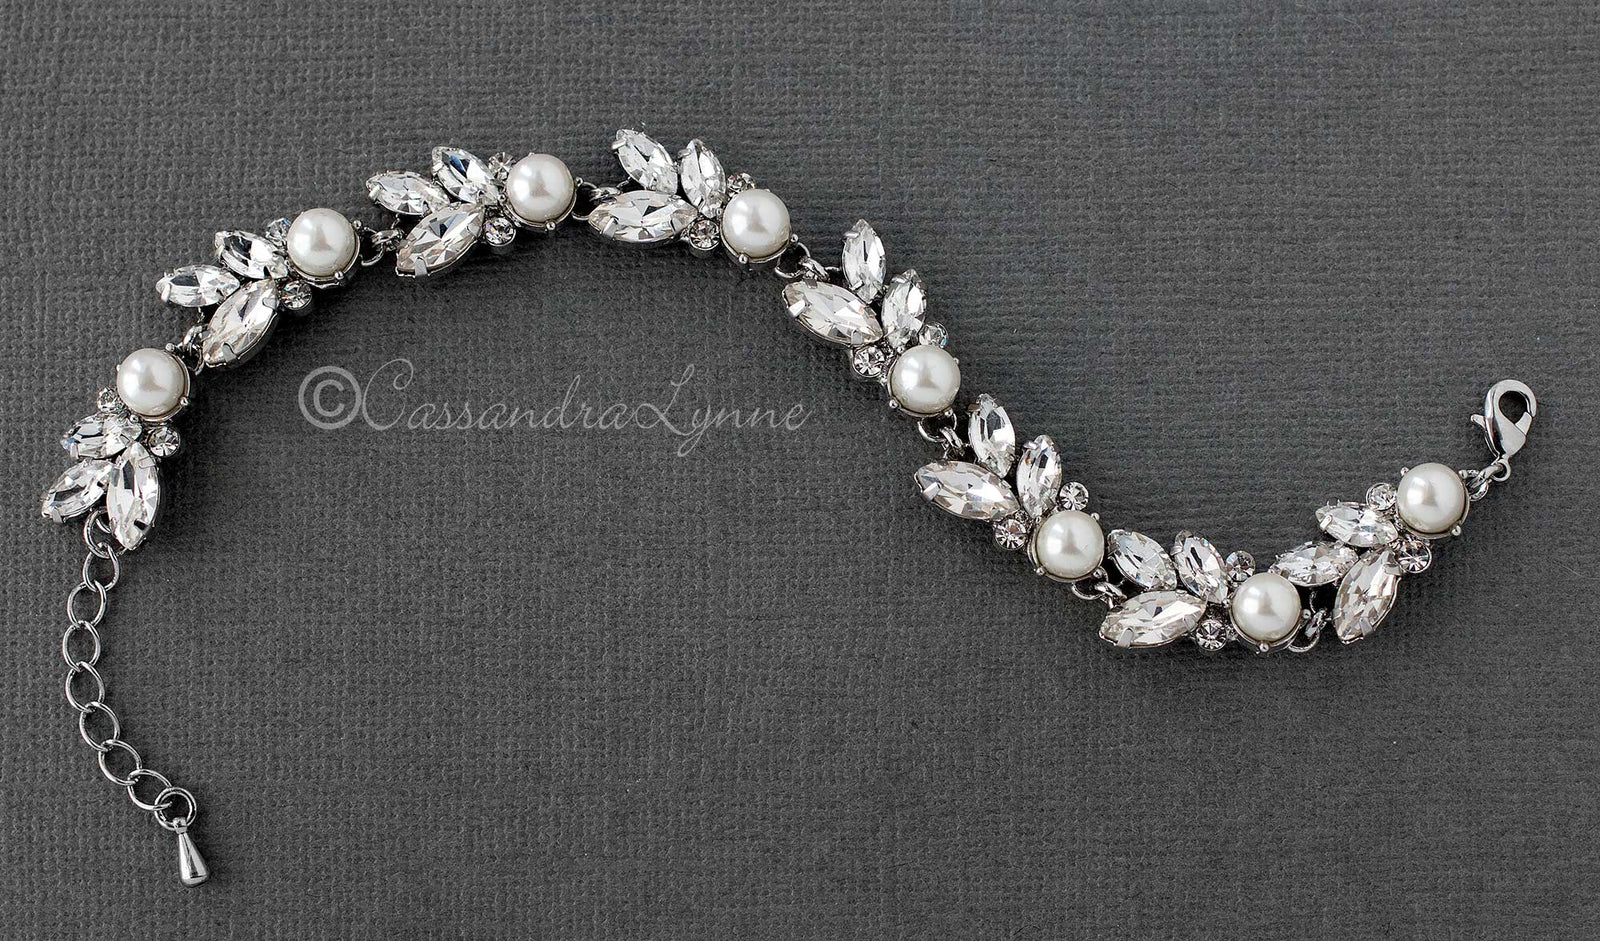 Bracelet of Pearl and Rhinestone Leaf - Cassandra Lynne